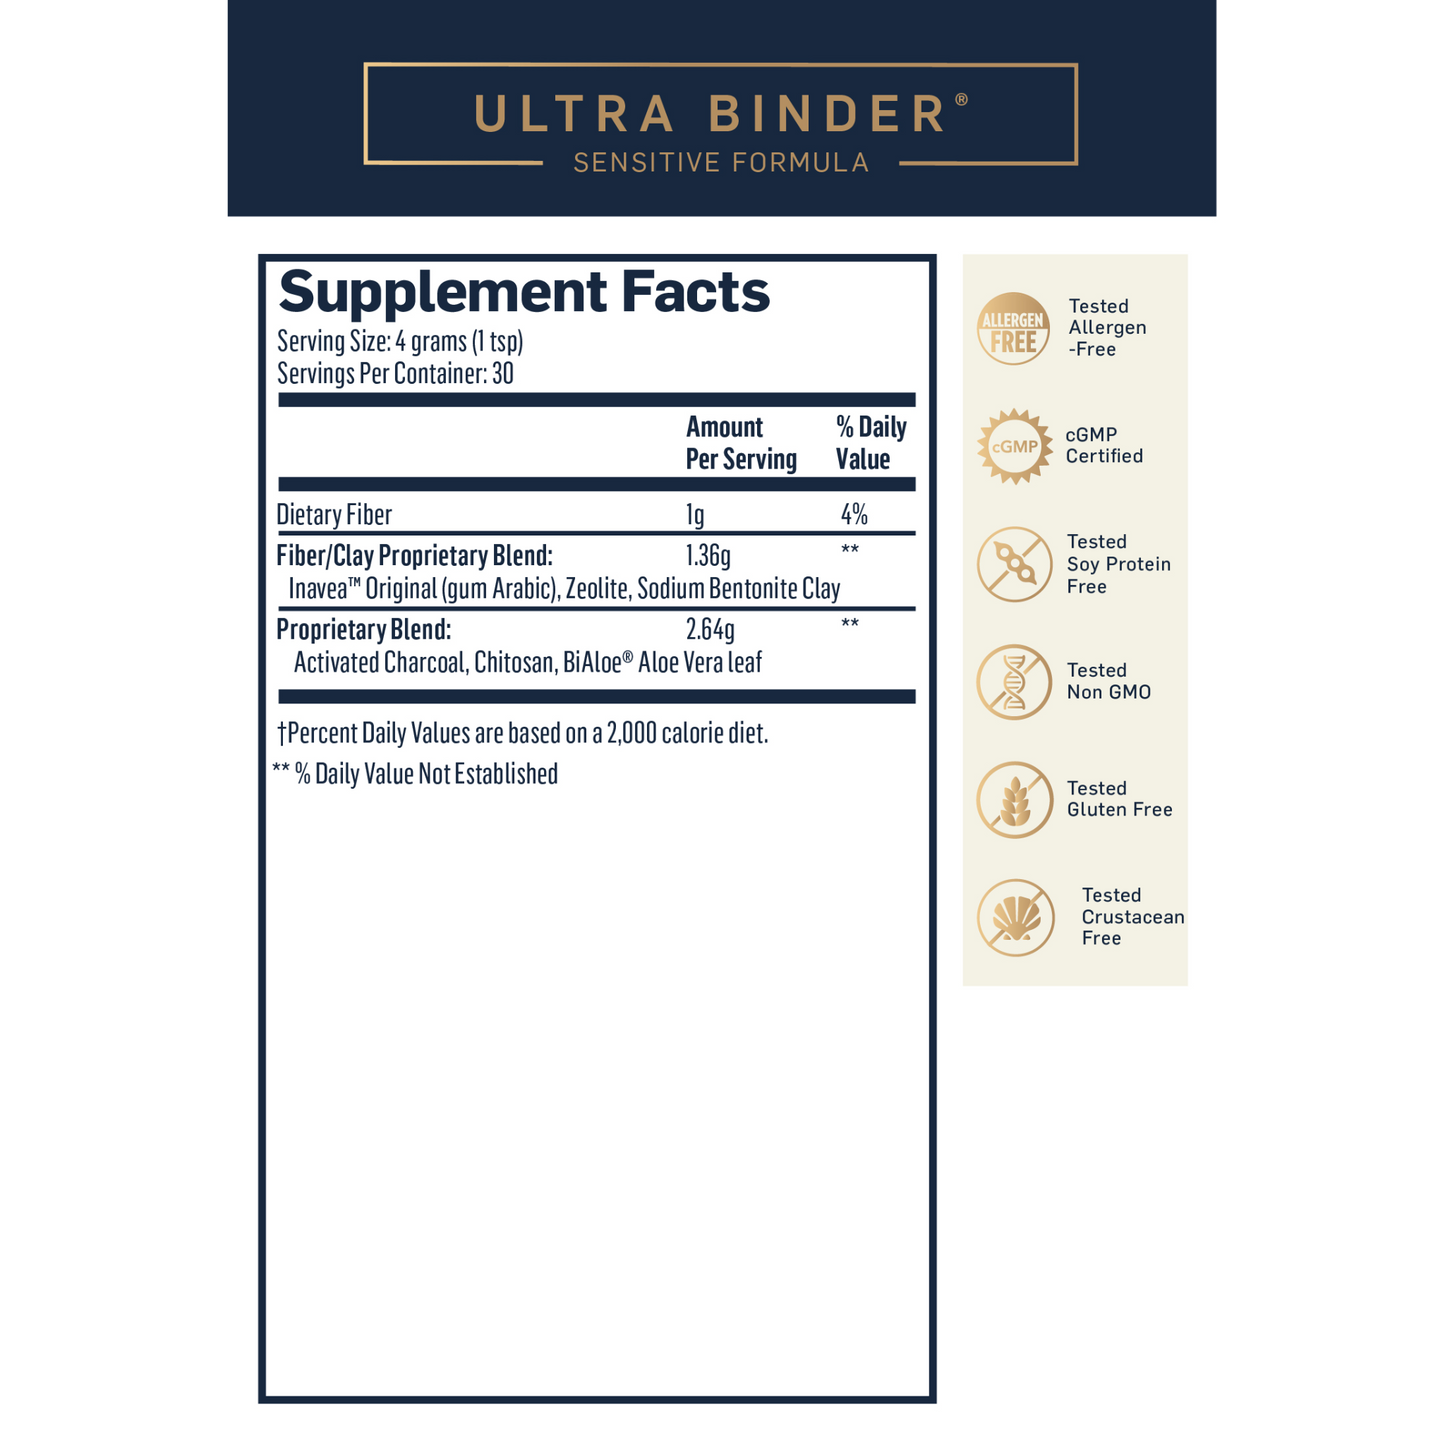 Ultra Binder Sensitive